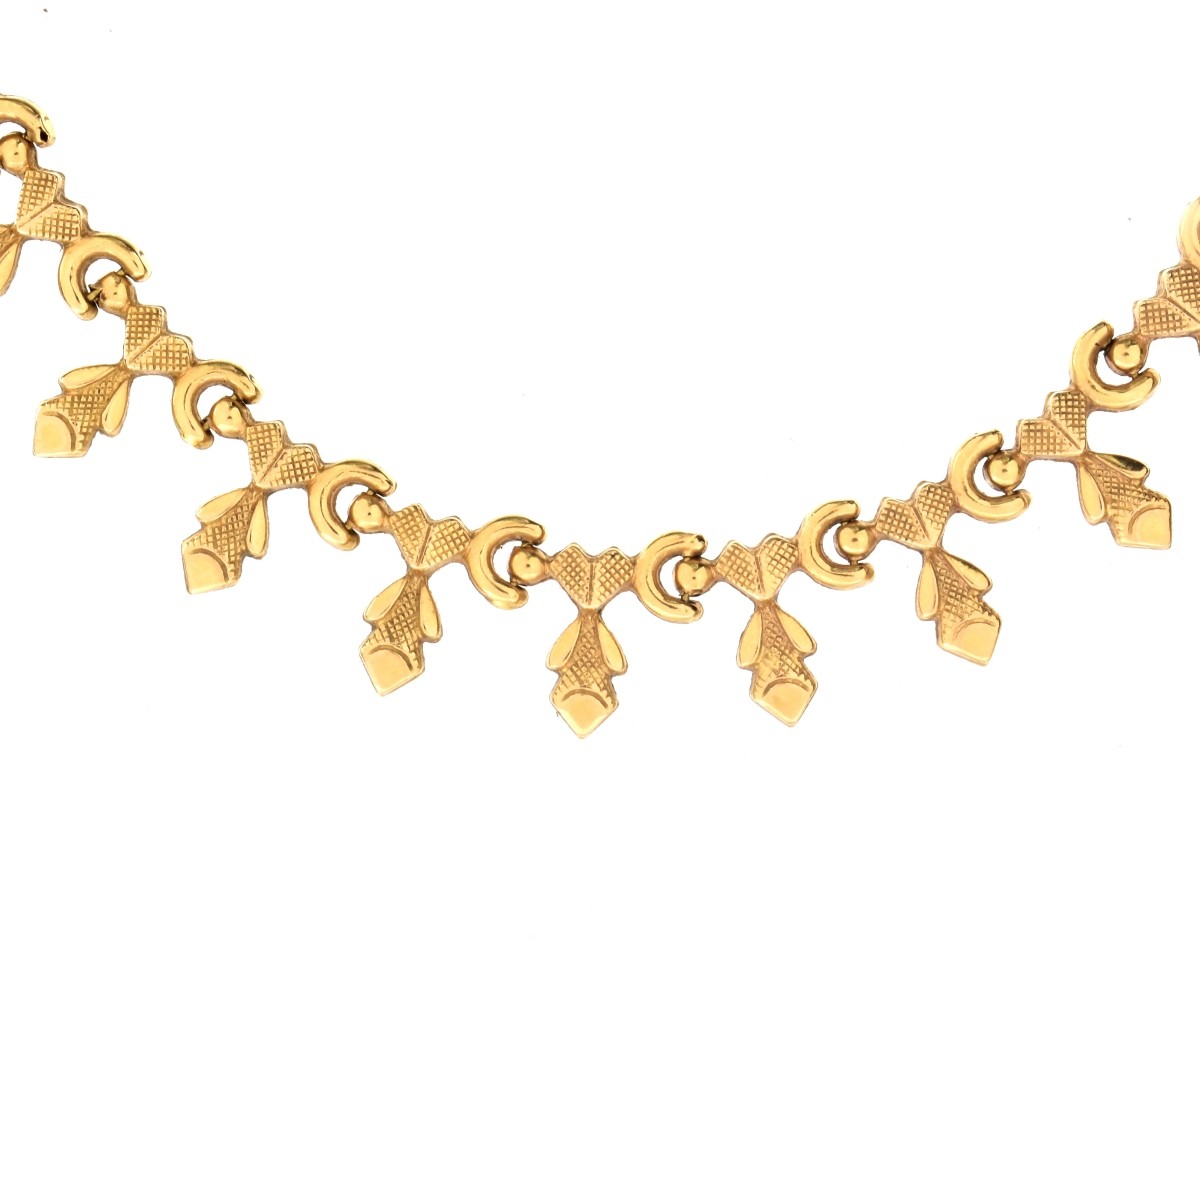 Vintage Italian 18K Yellow Gold Handmade Necklace